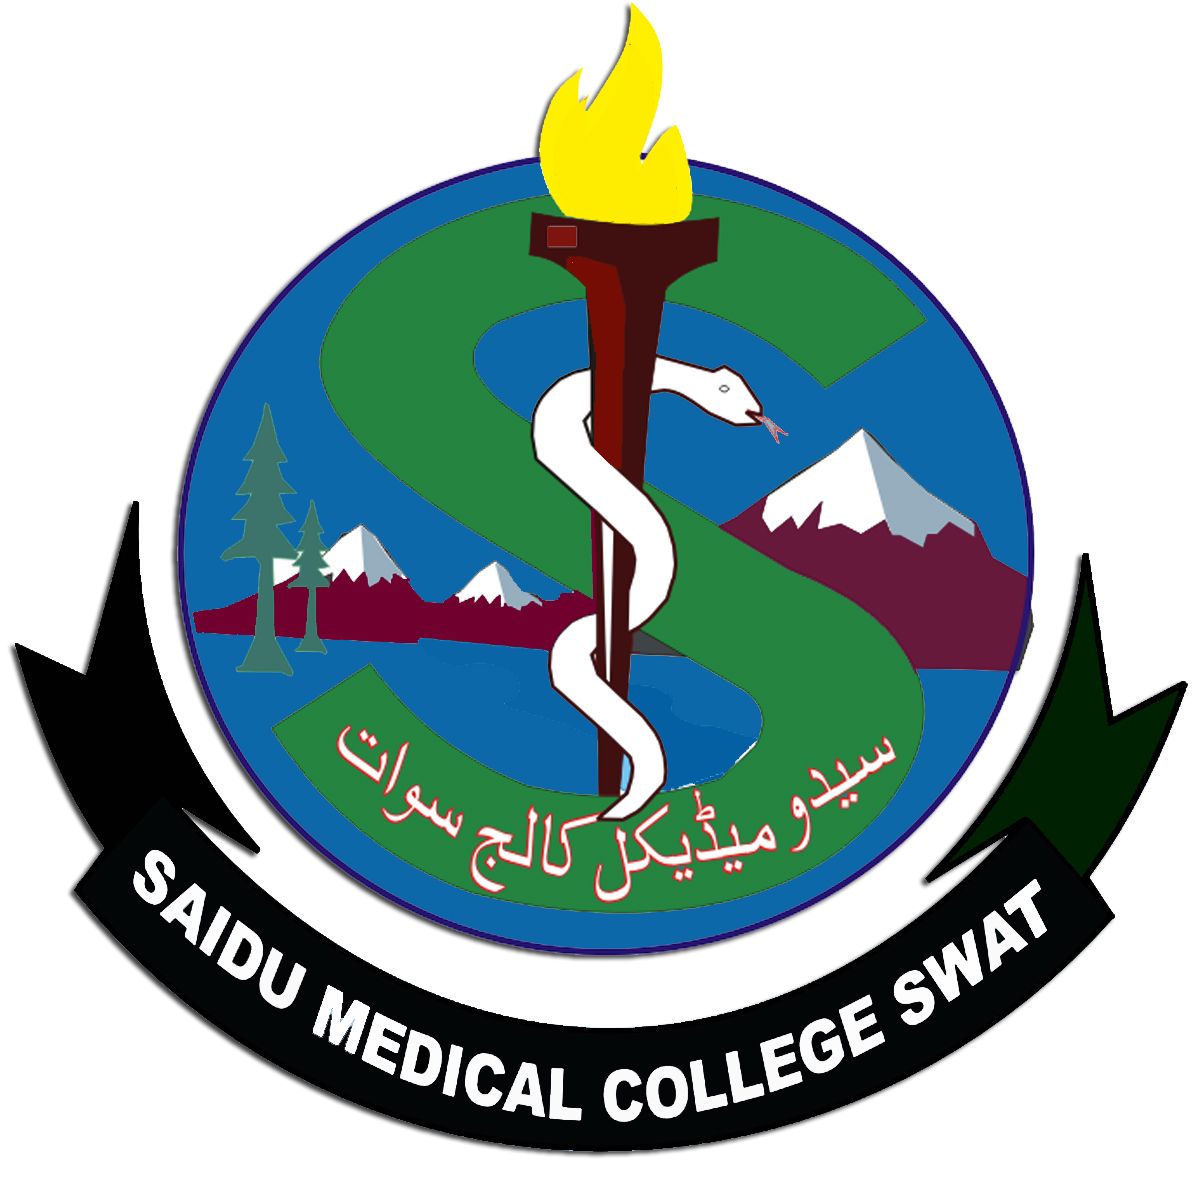 Saidu Medical College, Swat